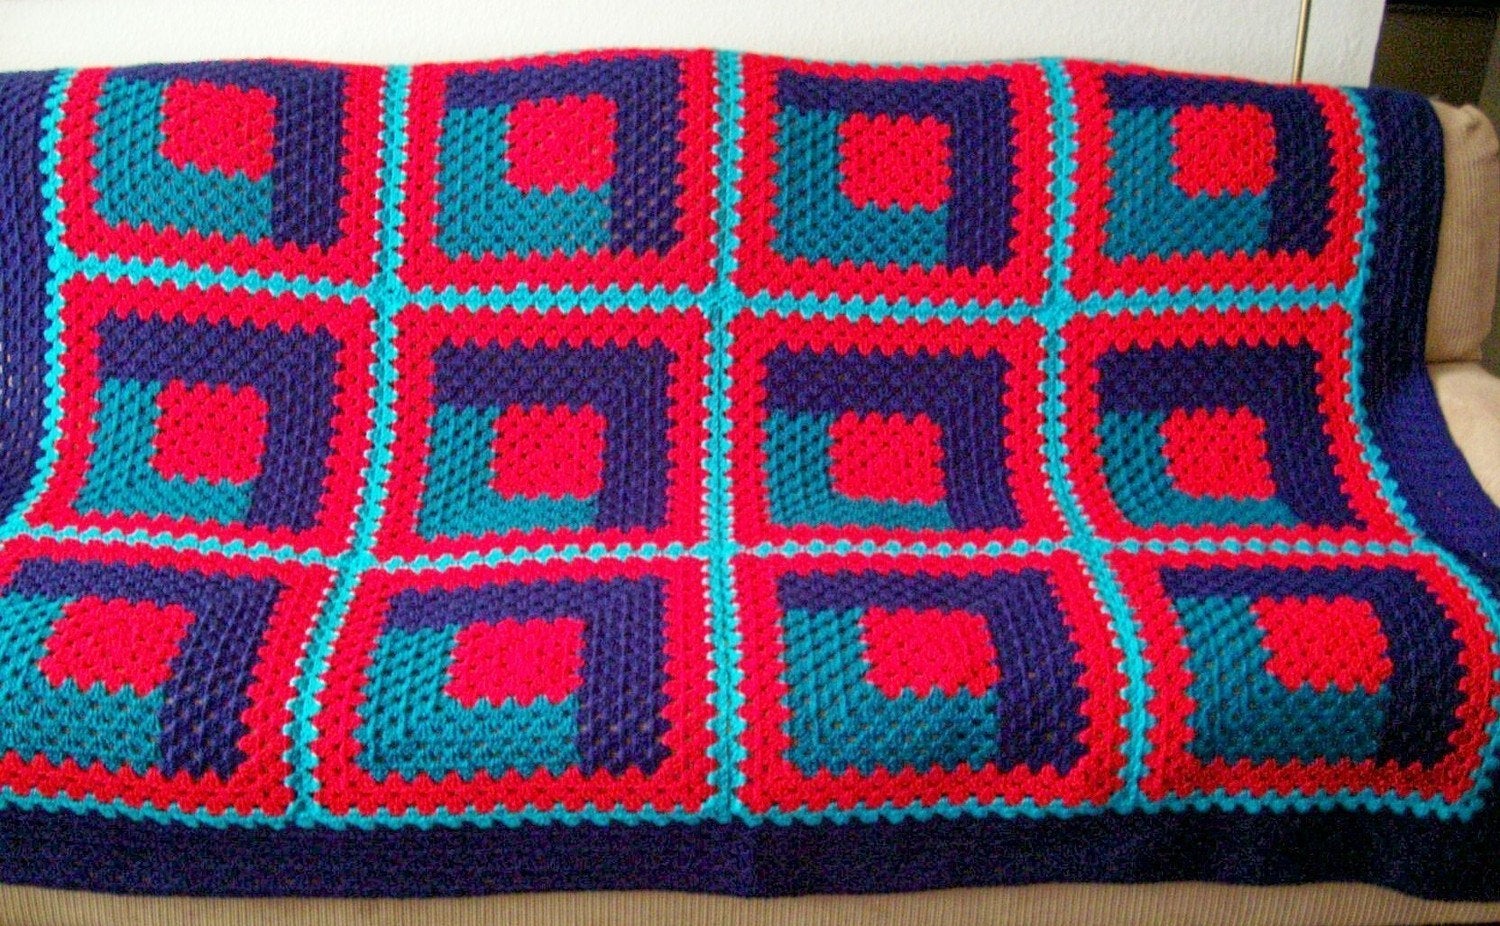 beginners - free crochet patterns for beginners blanket Il_fullxfull.159735435